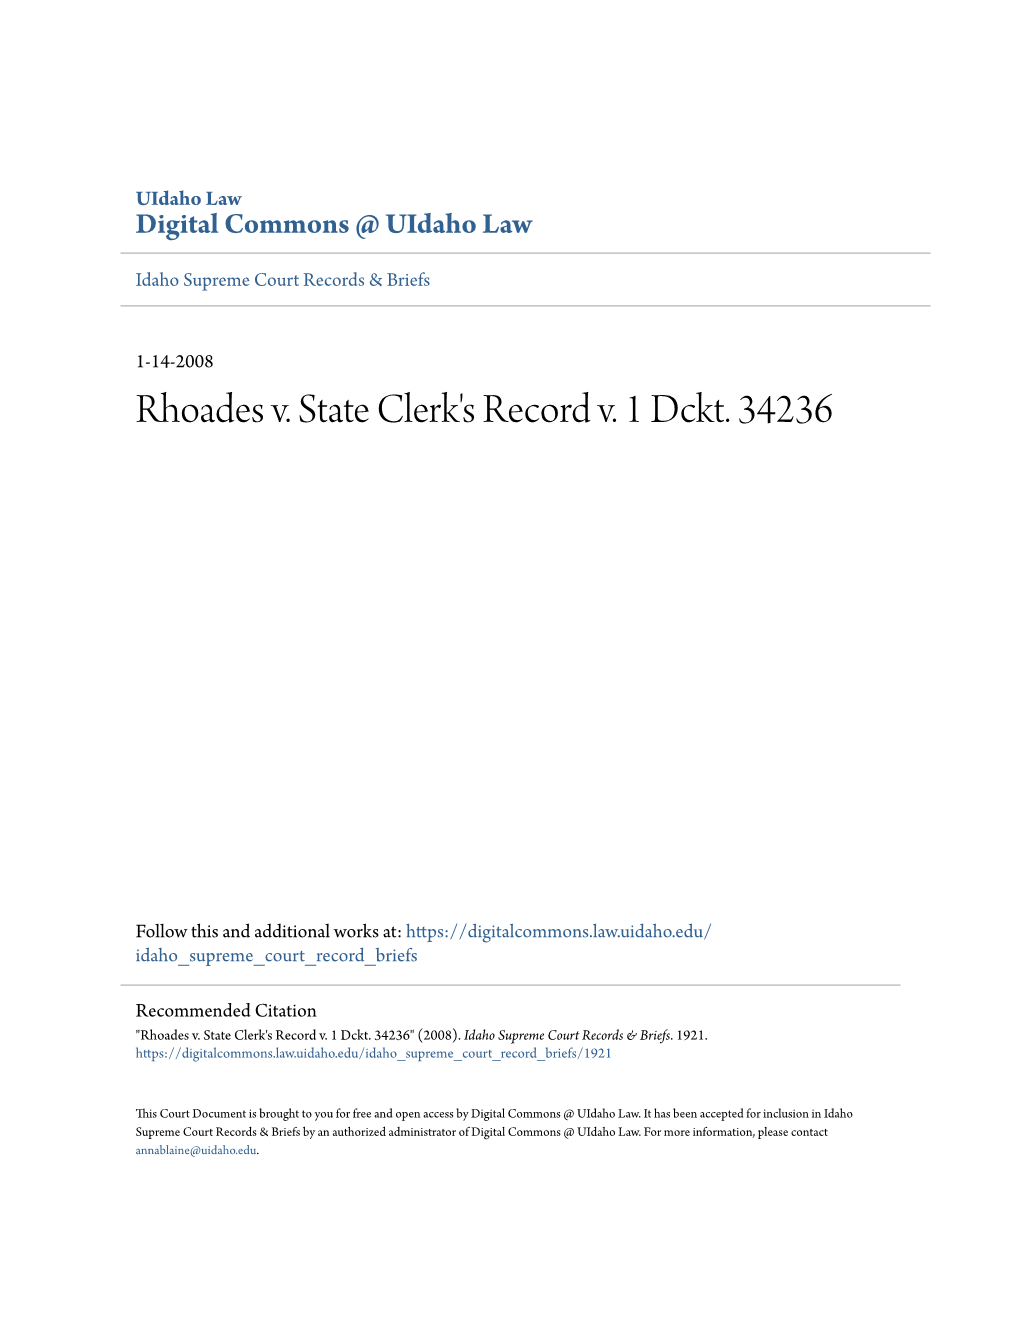 Rhoades V. State Clerk's Record V. 1 Dckt. 34236